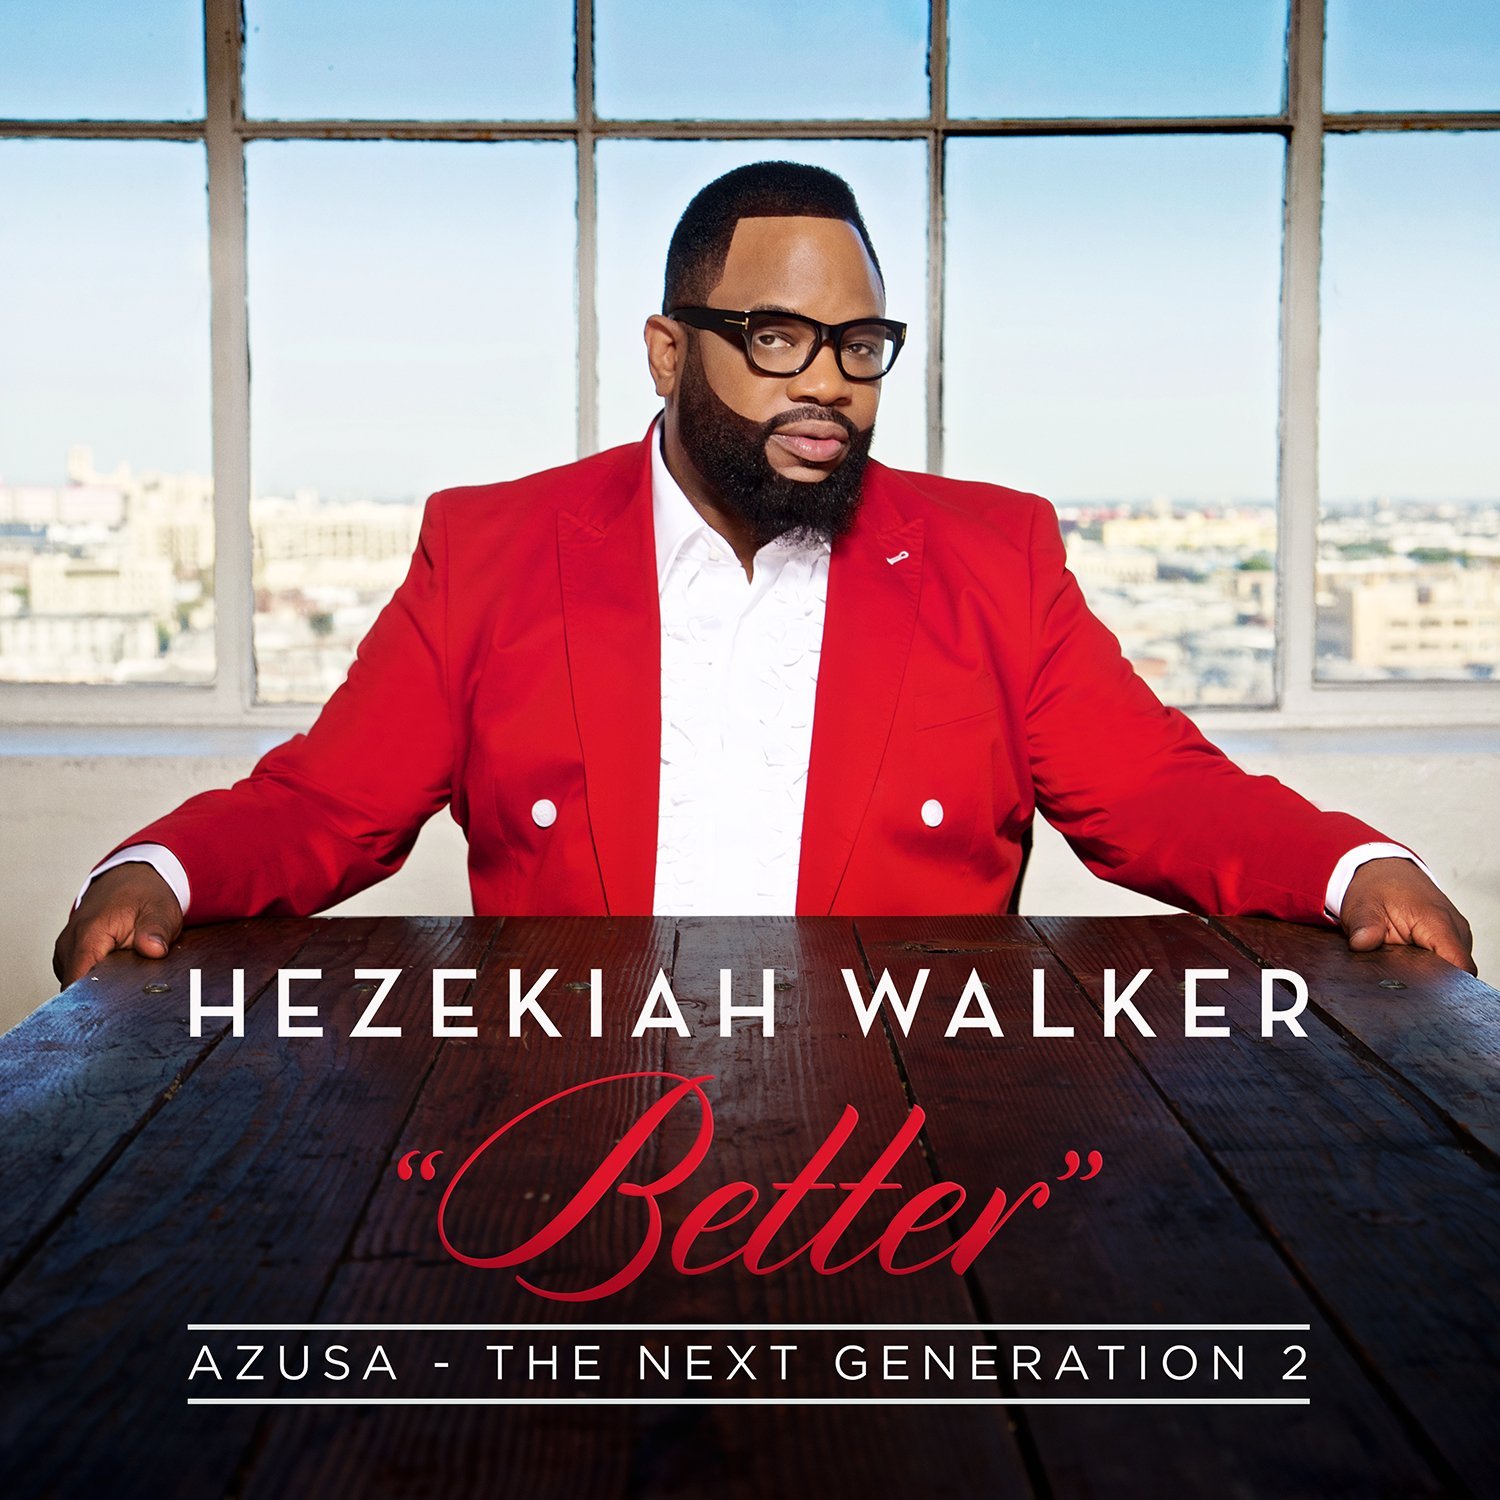 HEZEKIAH WALKER - AZUSA THE NEXT GENERATION 2